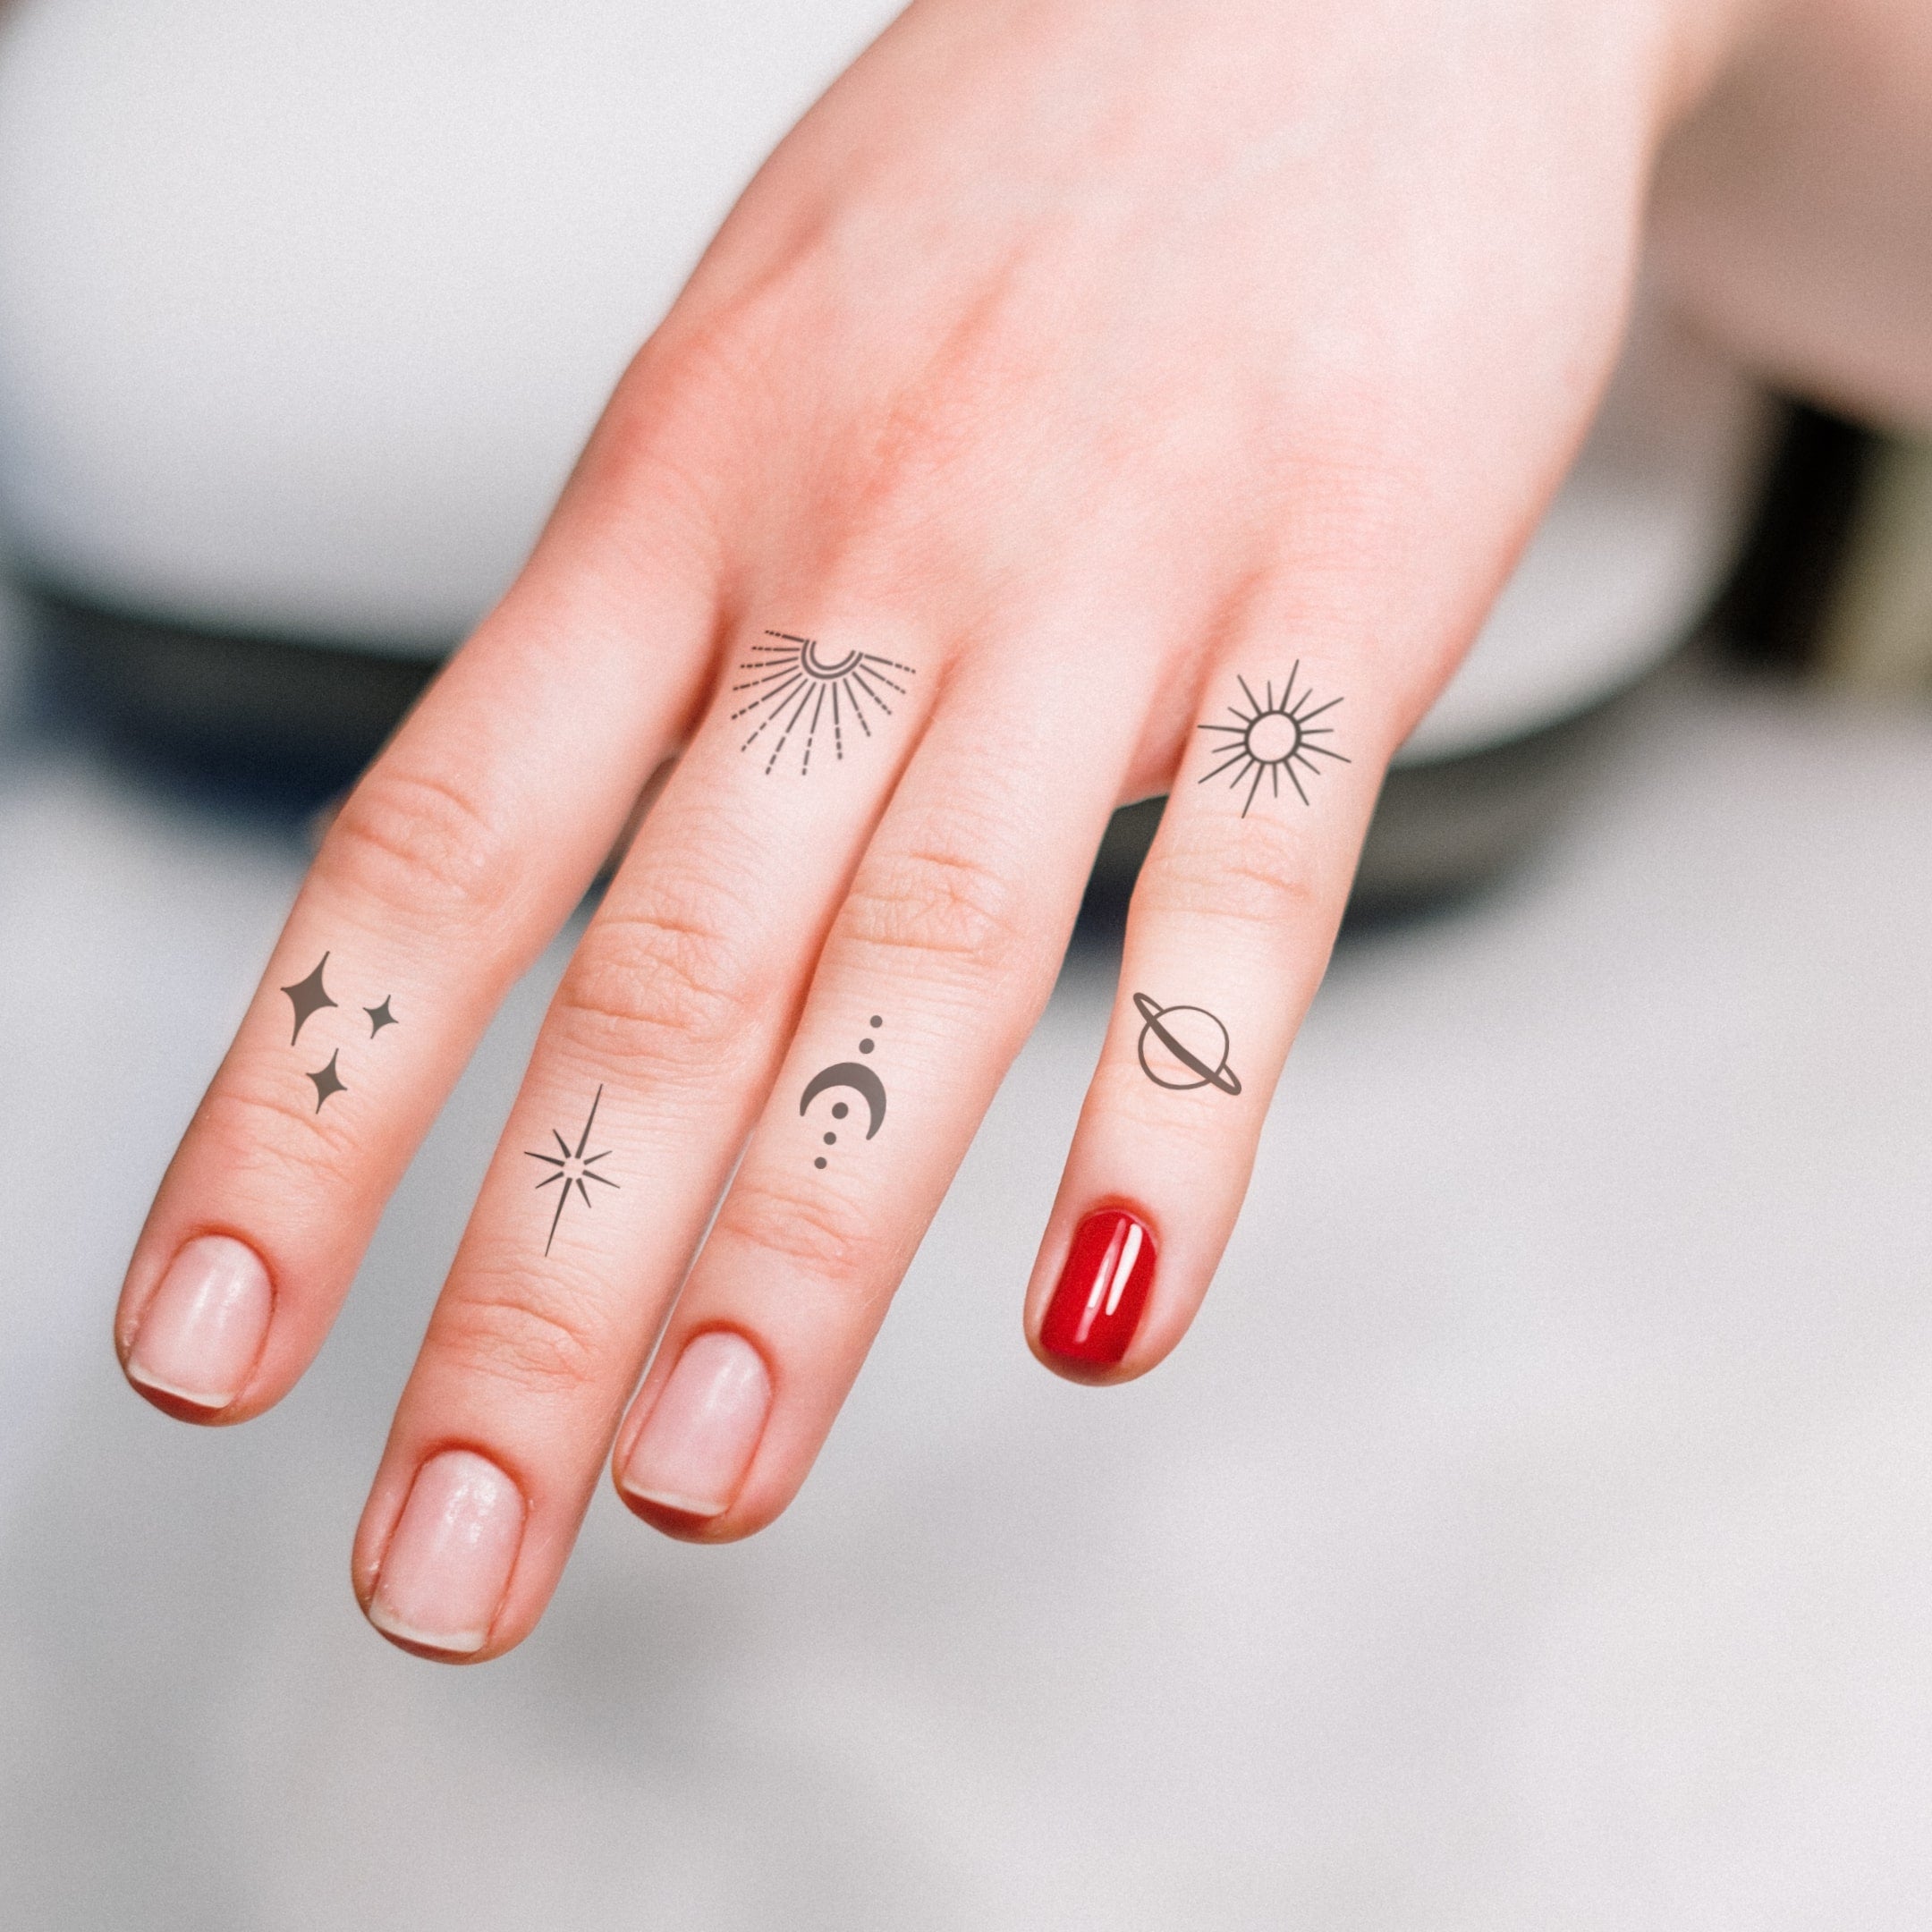 Weltraum-Finger-Tattoos